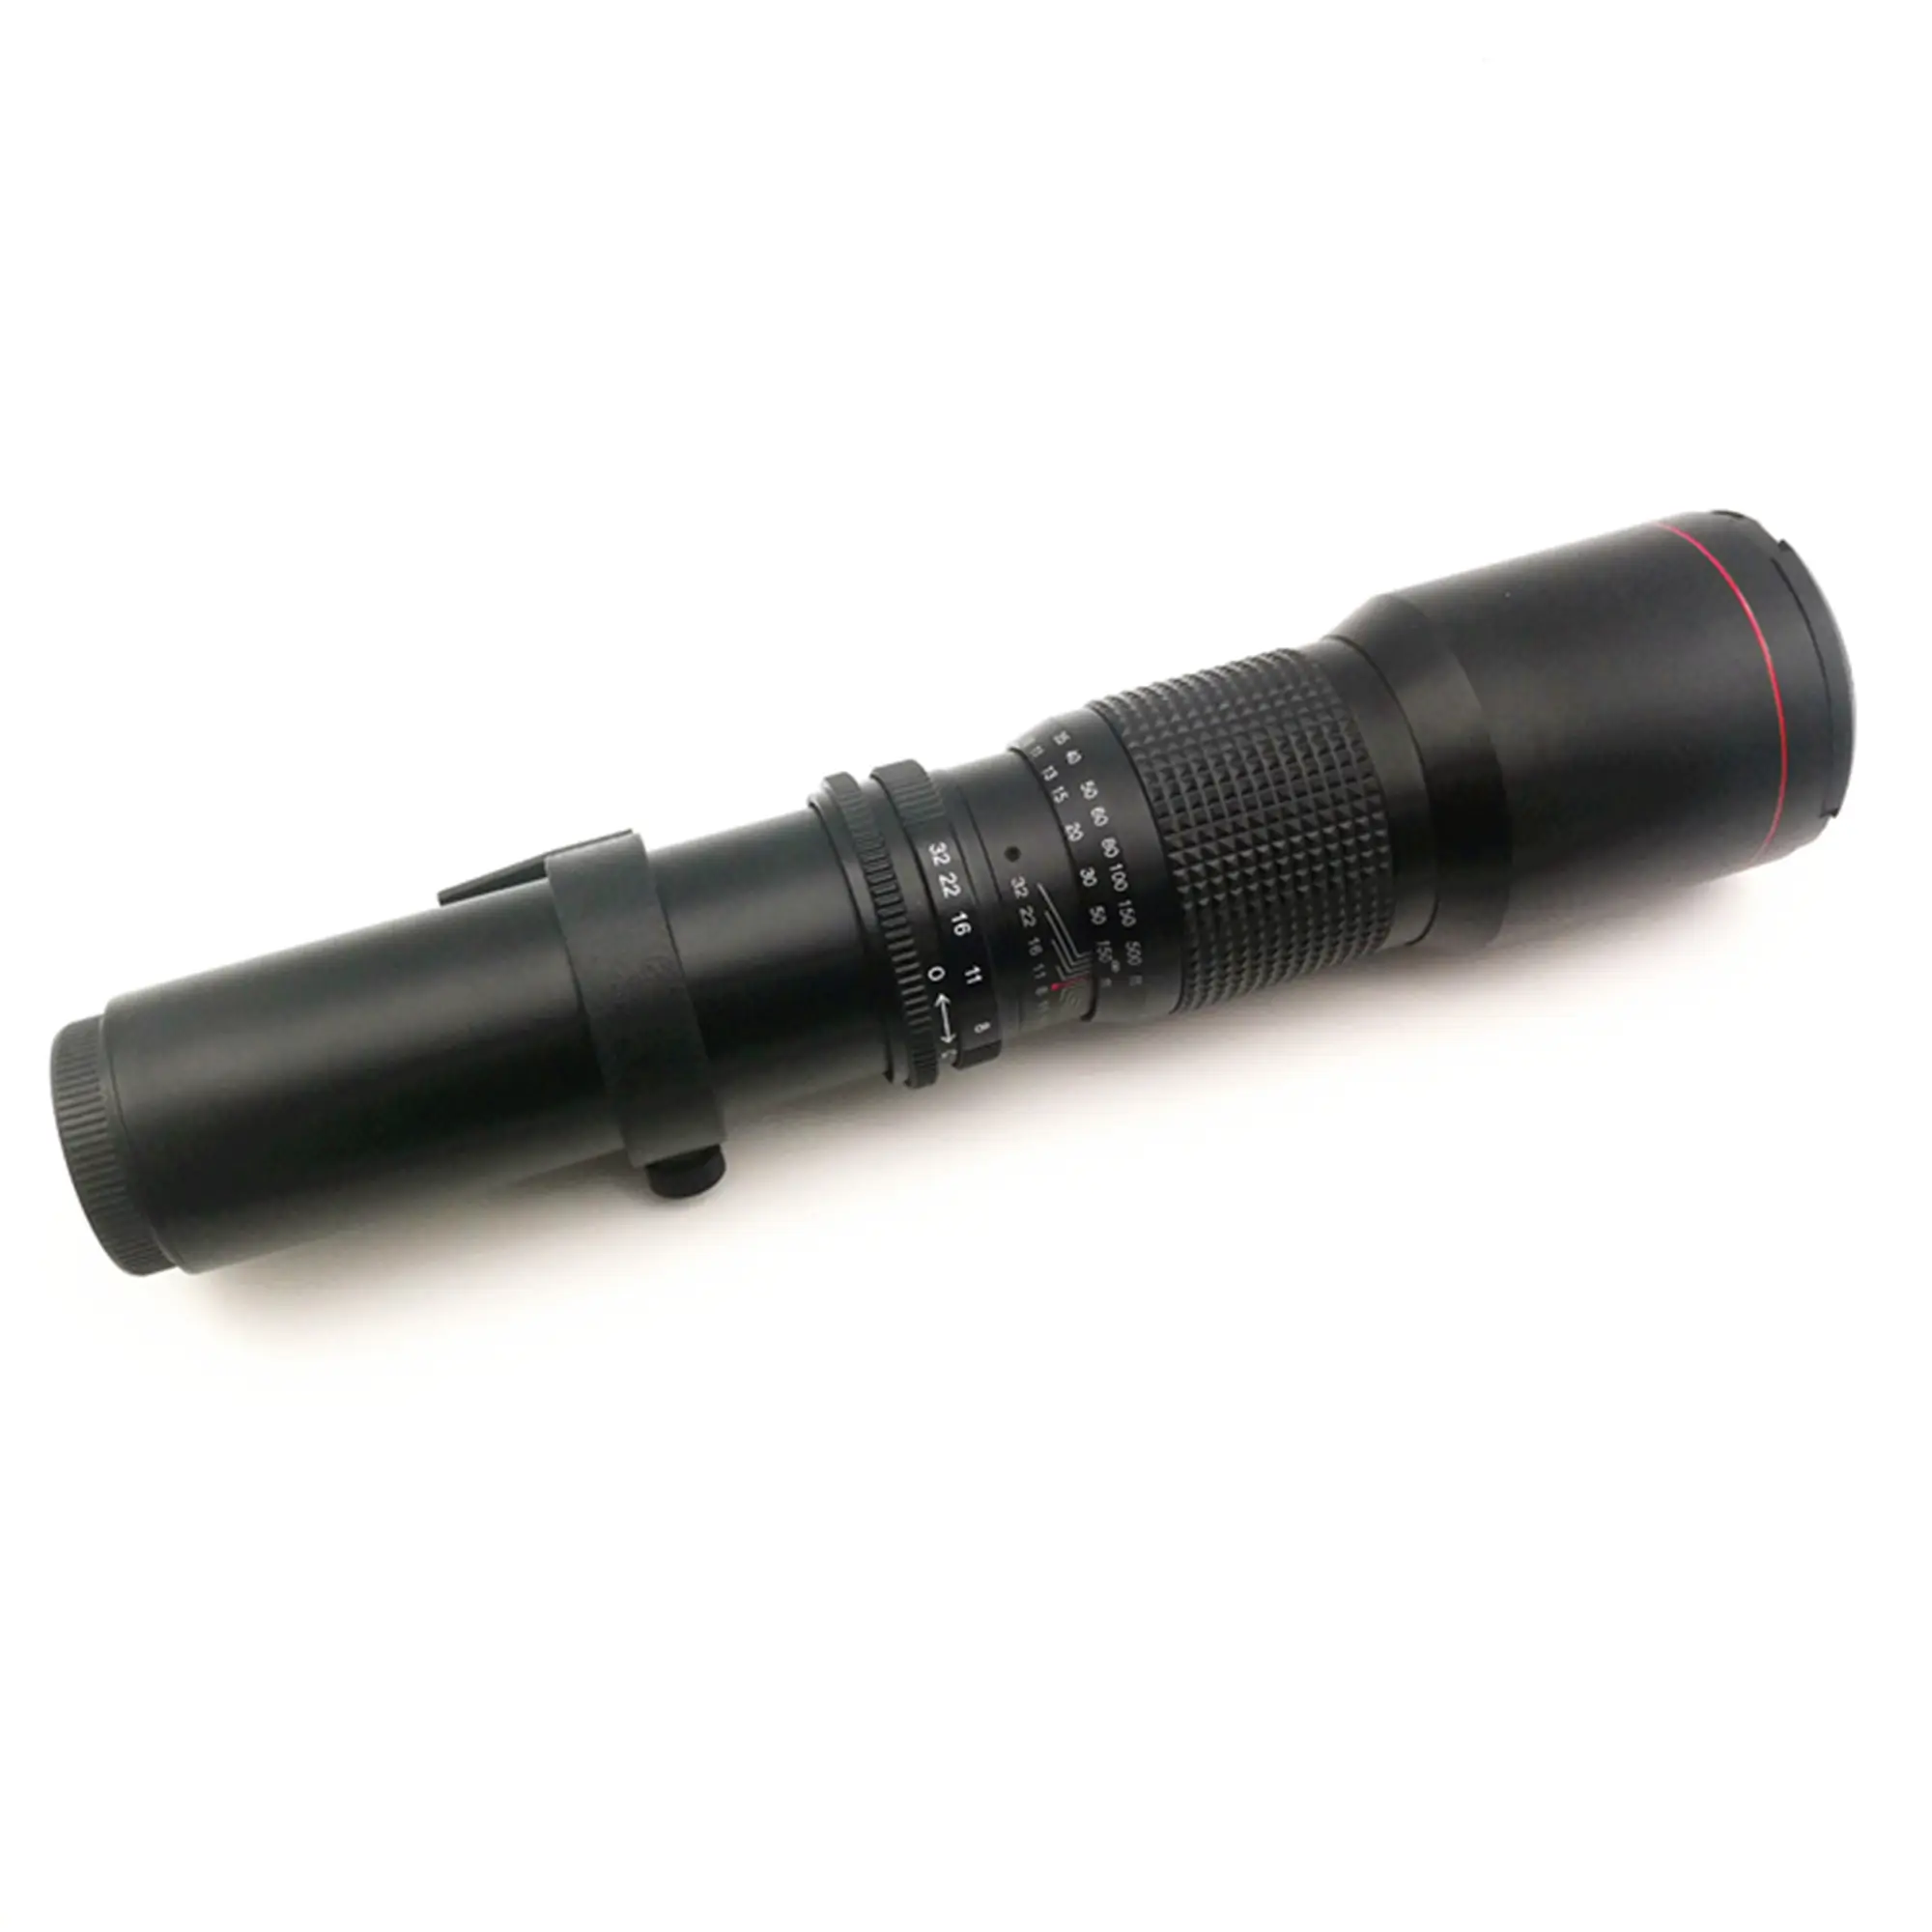 Lente réflex digital para cámara réflex, 500mm f/8,3-16 réflex zoom dslr, soporte de fábrica, barato